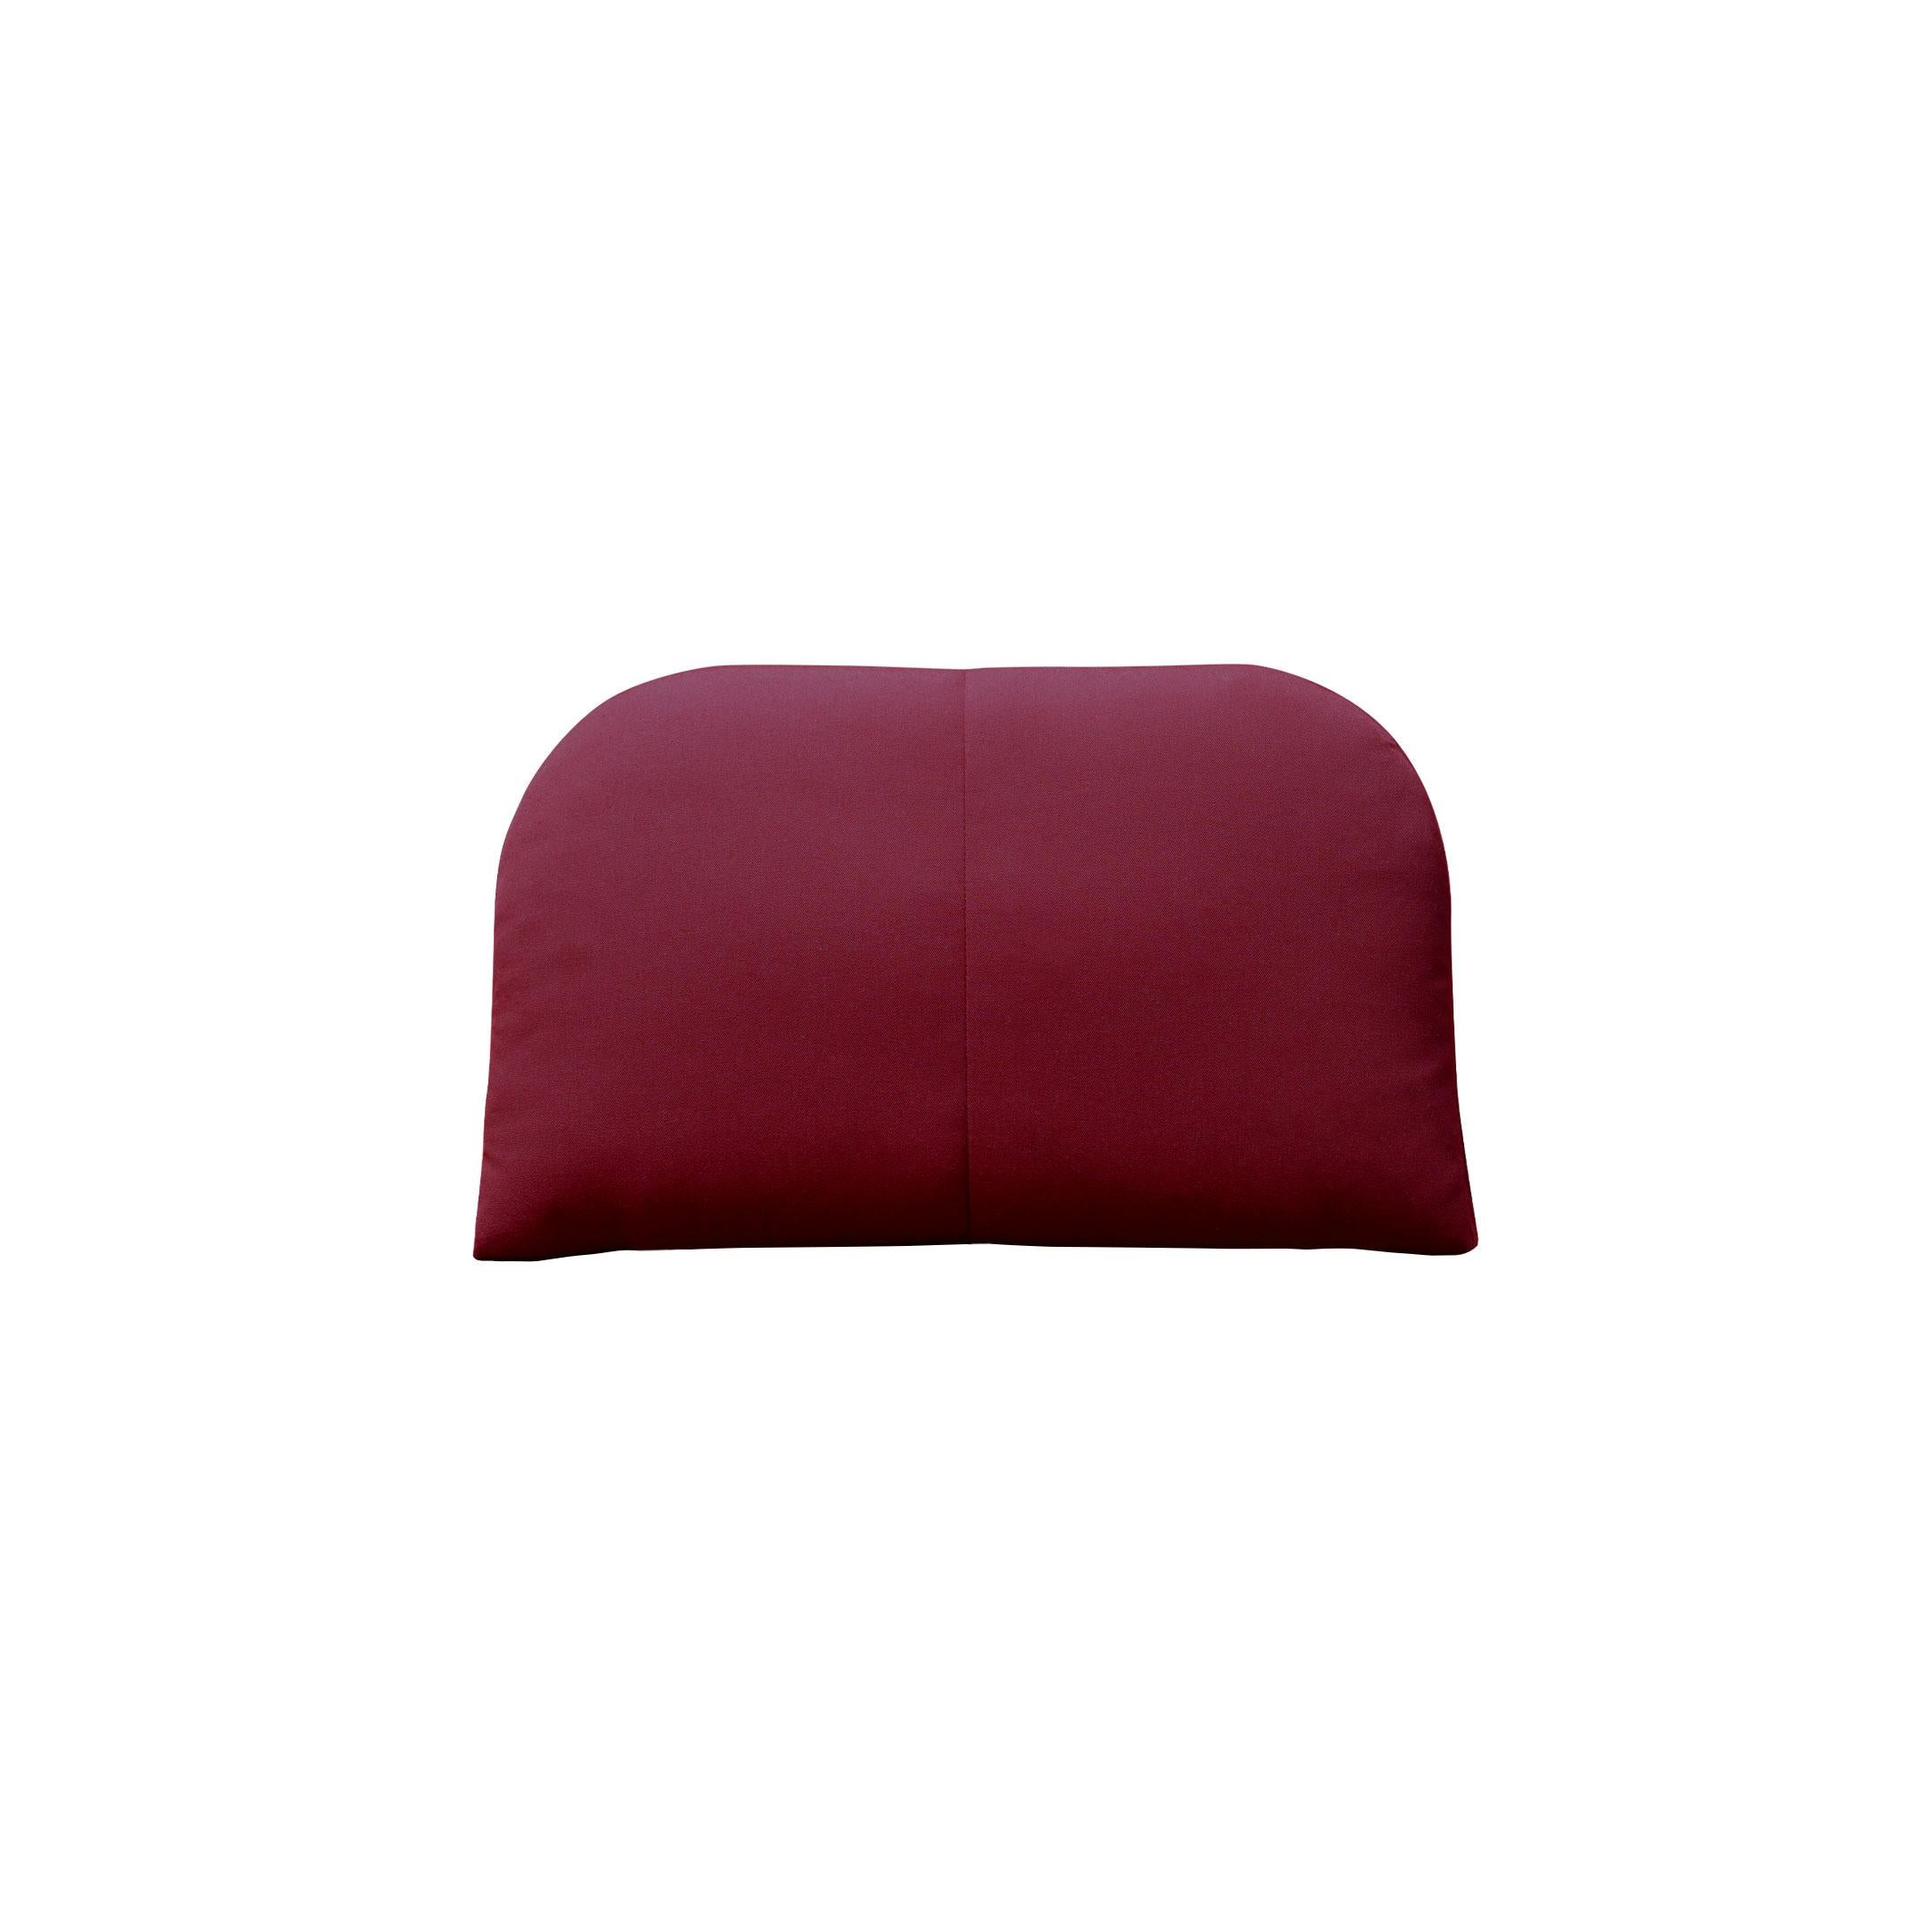 American Bend Goods - Arc Throw Pillow in Granite Sunbrella For Sale